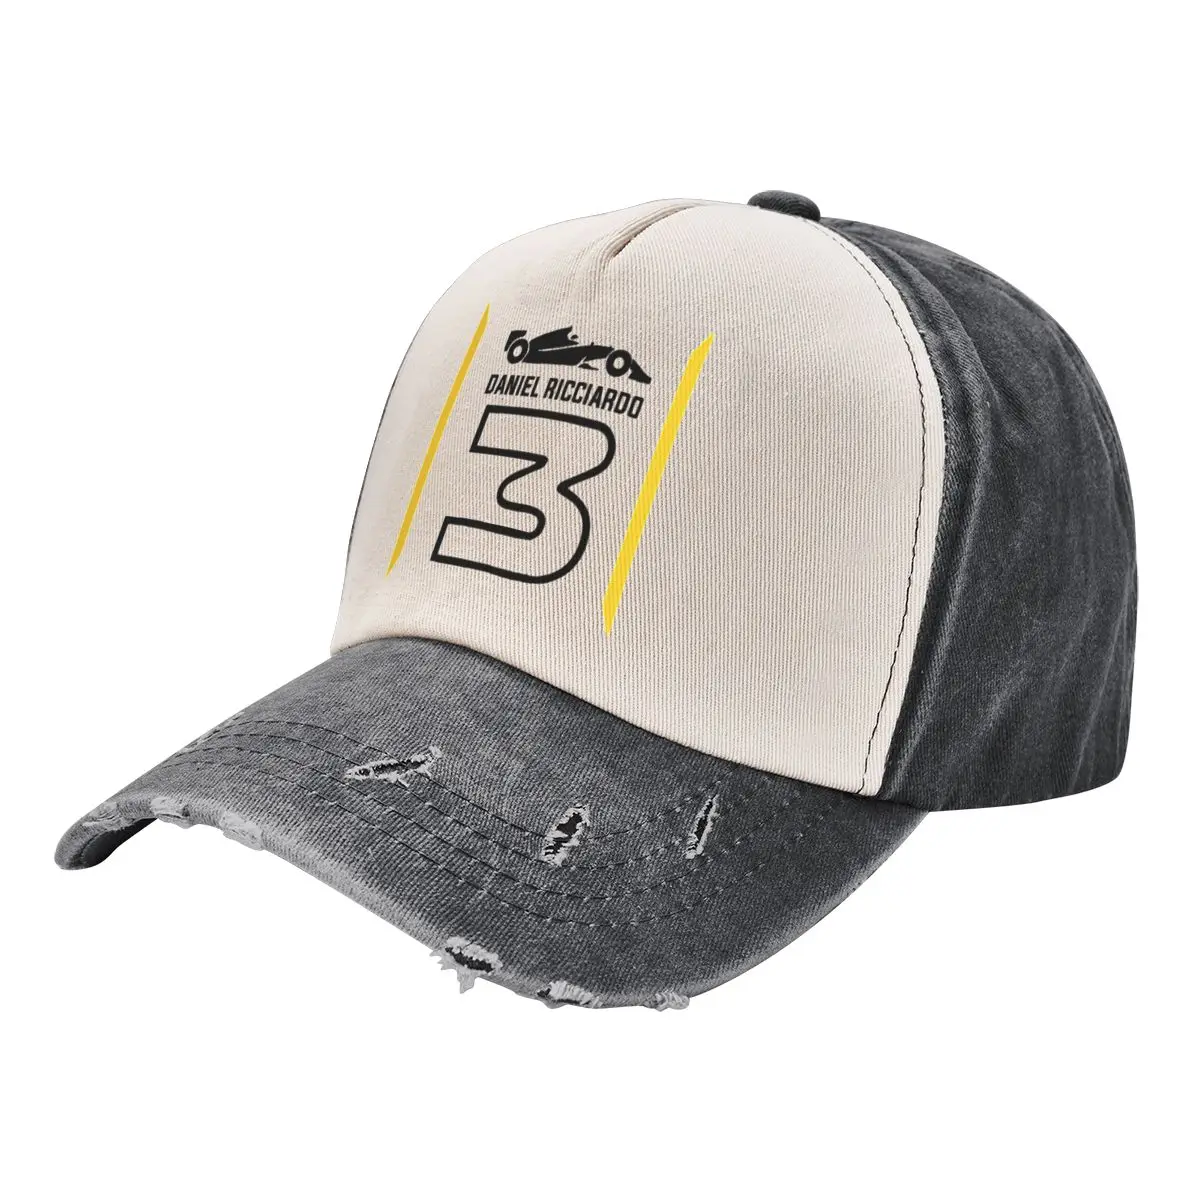 

F1 Daniel Ricciardo Baseball Cap Adjustable Washed Vintage Cotton Denim Distressed Hat for Women Men